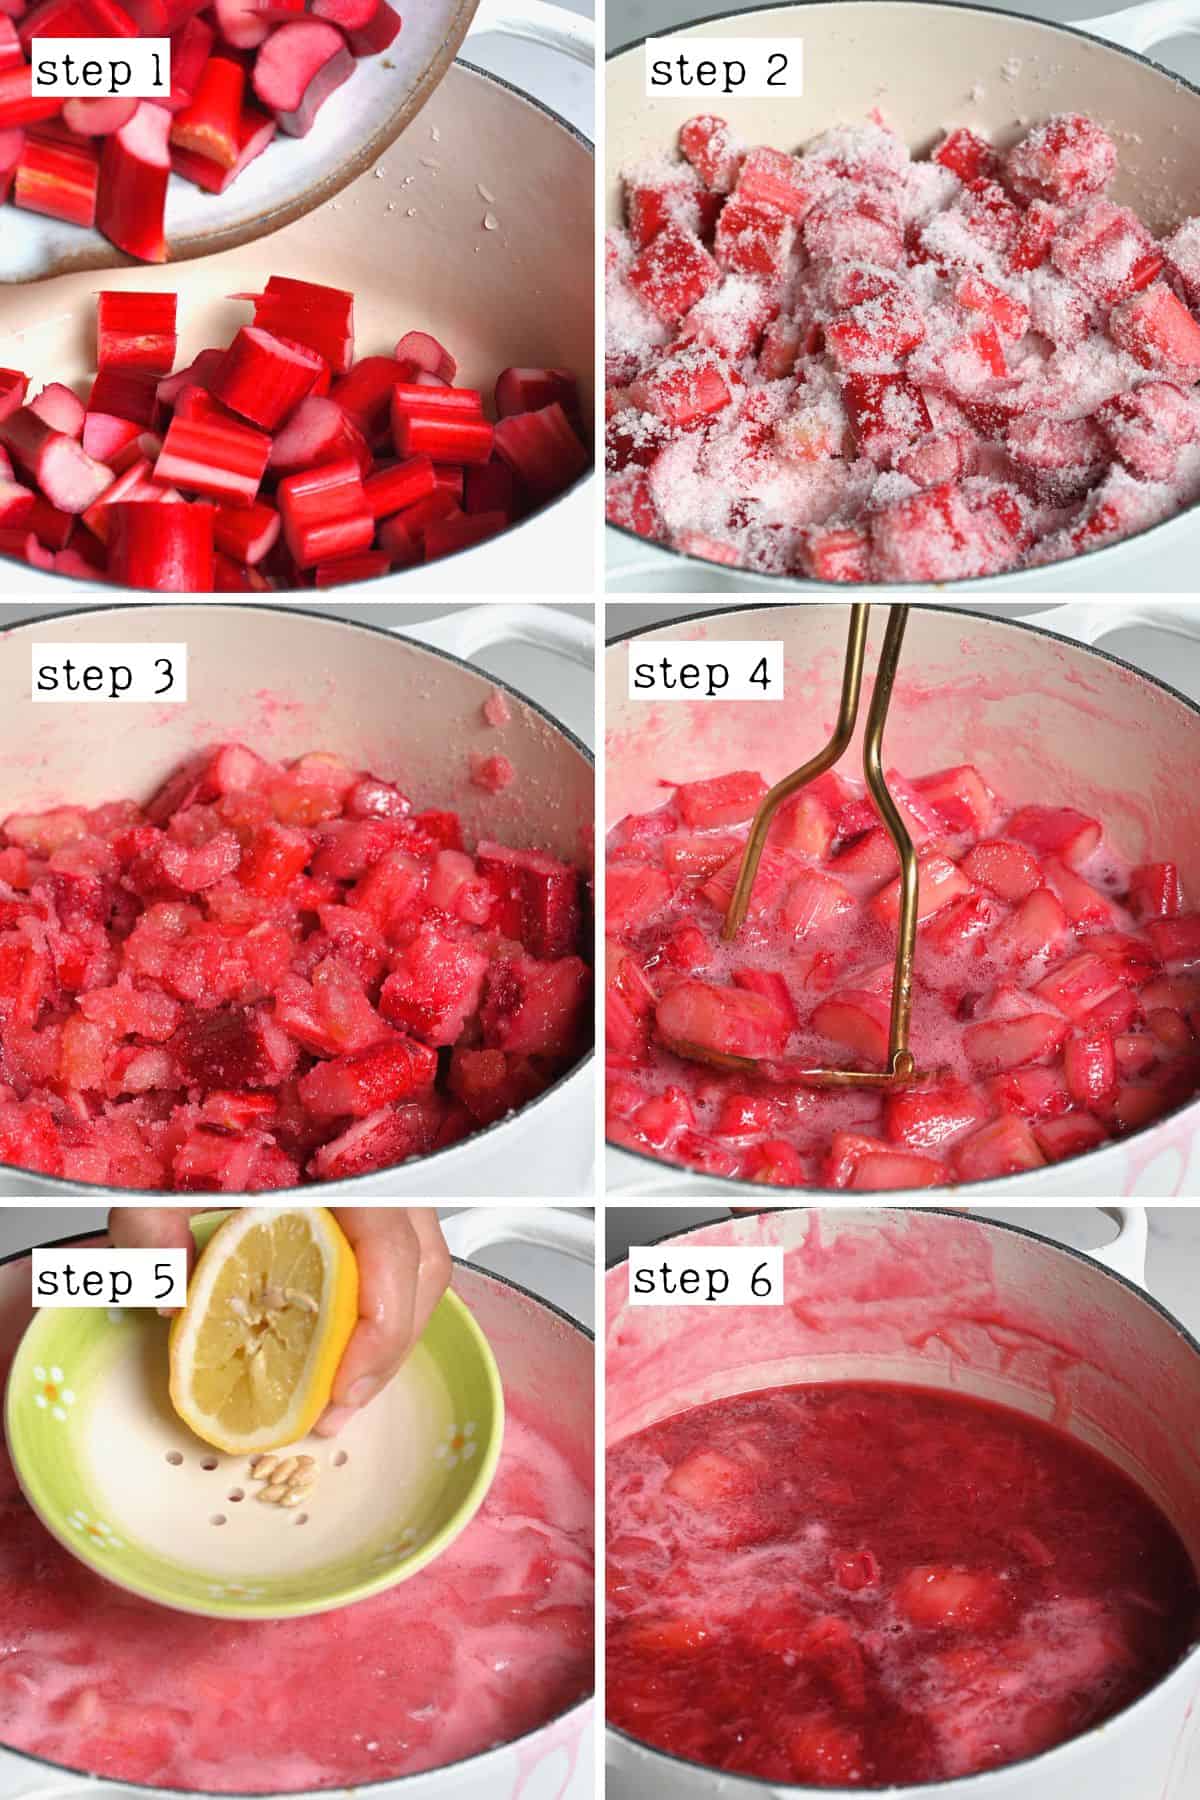 Steps for making rhubarb jam